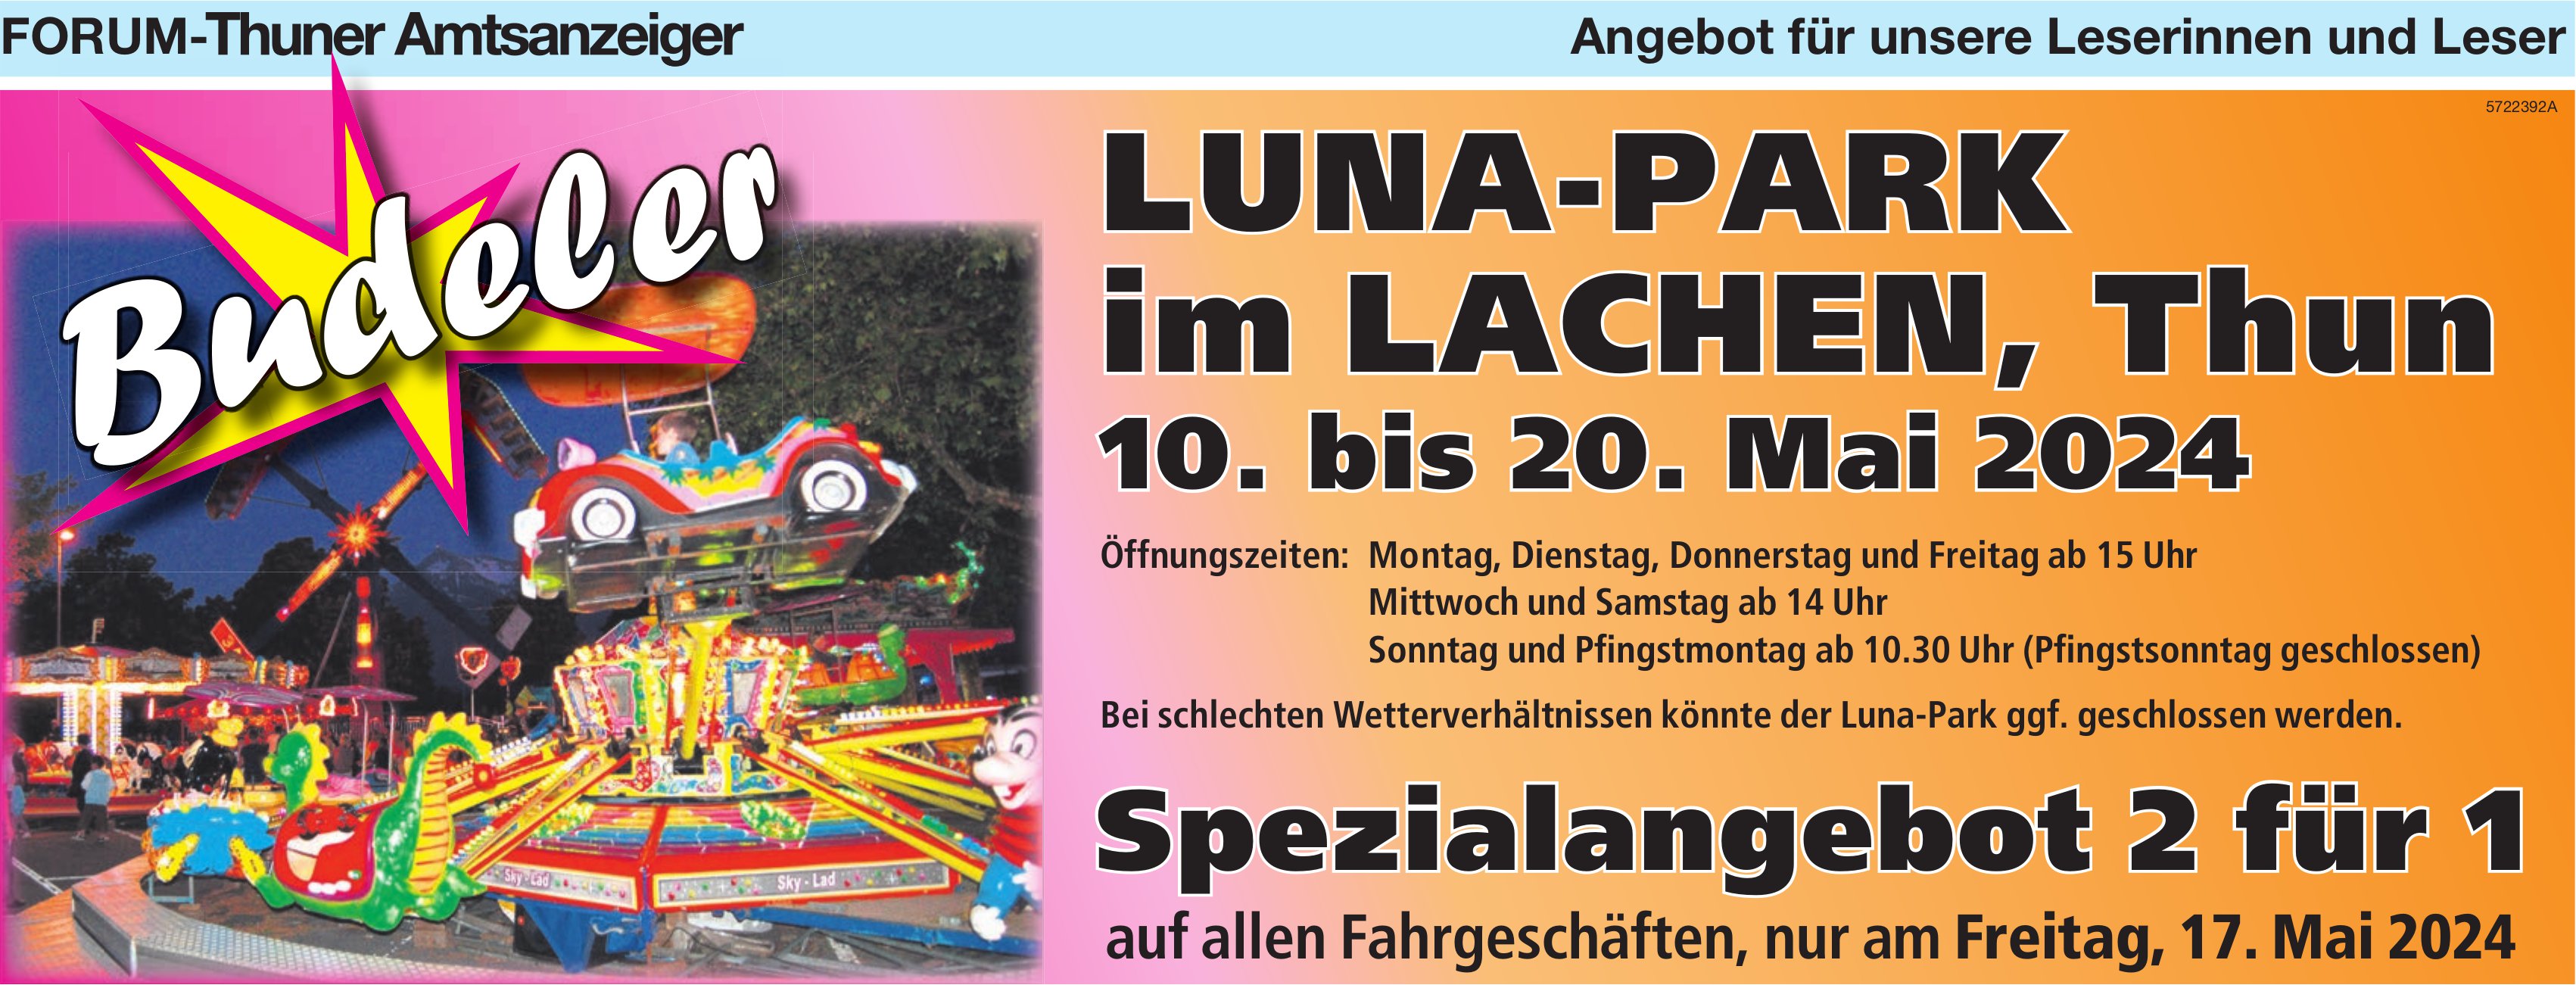 Budeler Luna-Park, 10. bis 20. Mai,  Spezialangebot 2 für 1 am 17. Mai, Forum-Thuner Amtsanzeiger, Lachen,  Thun